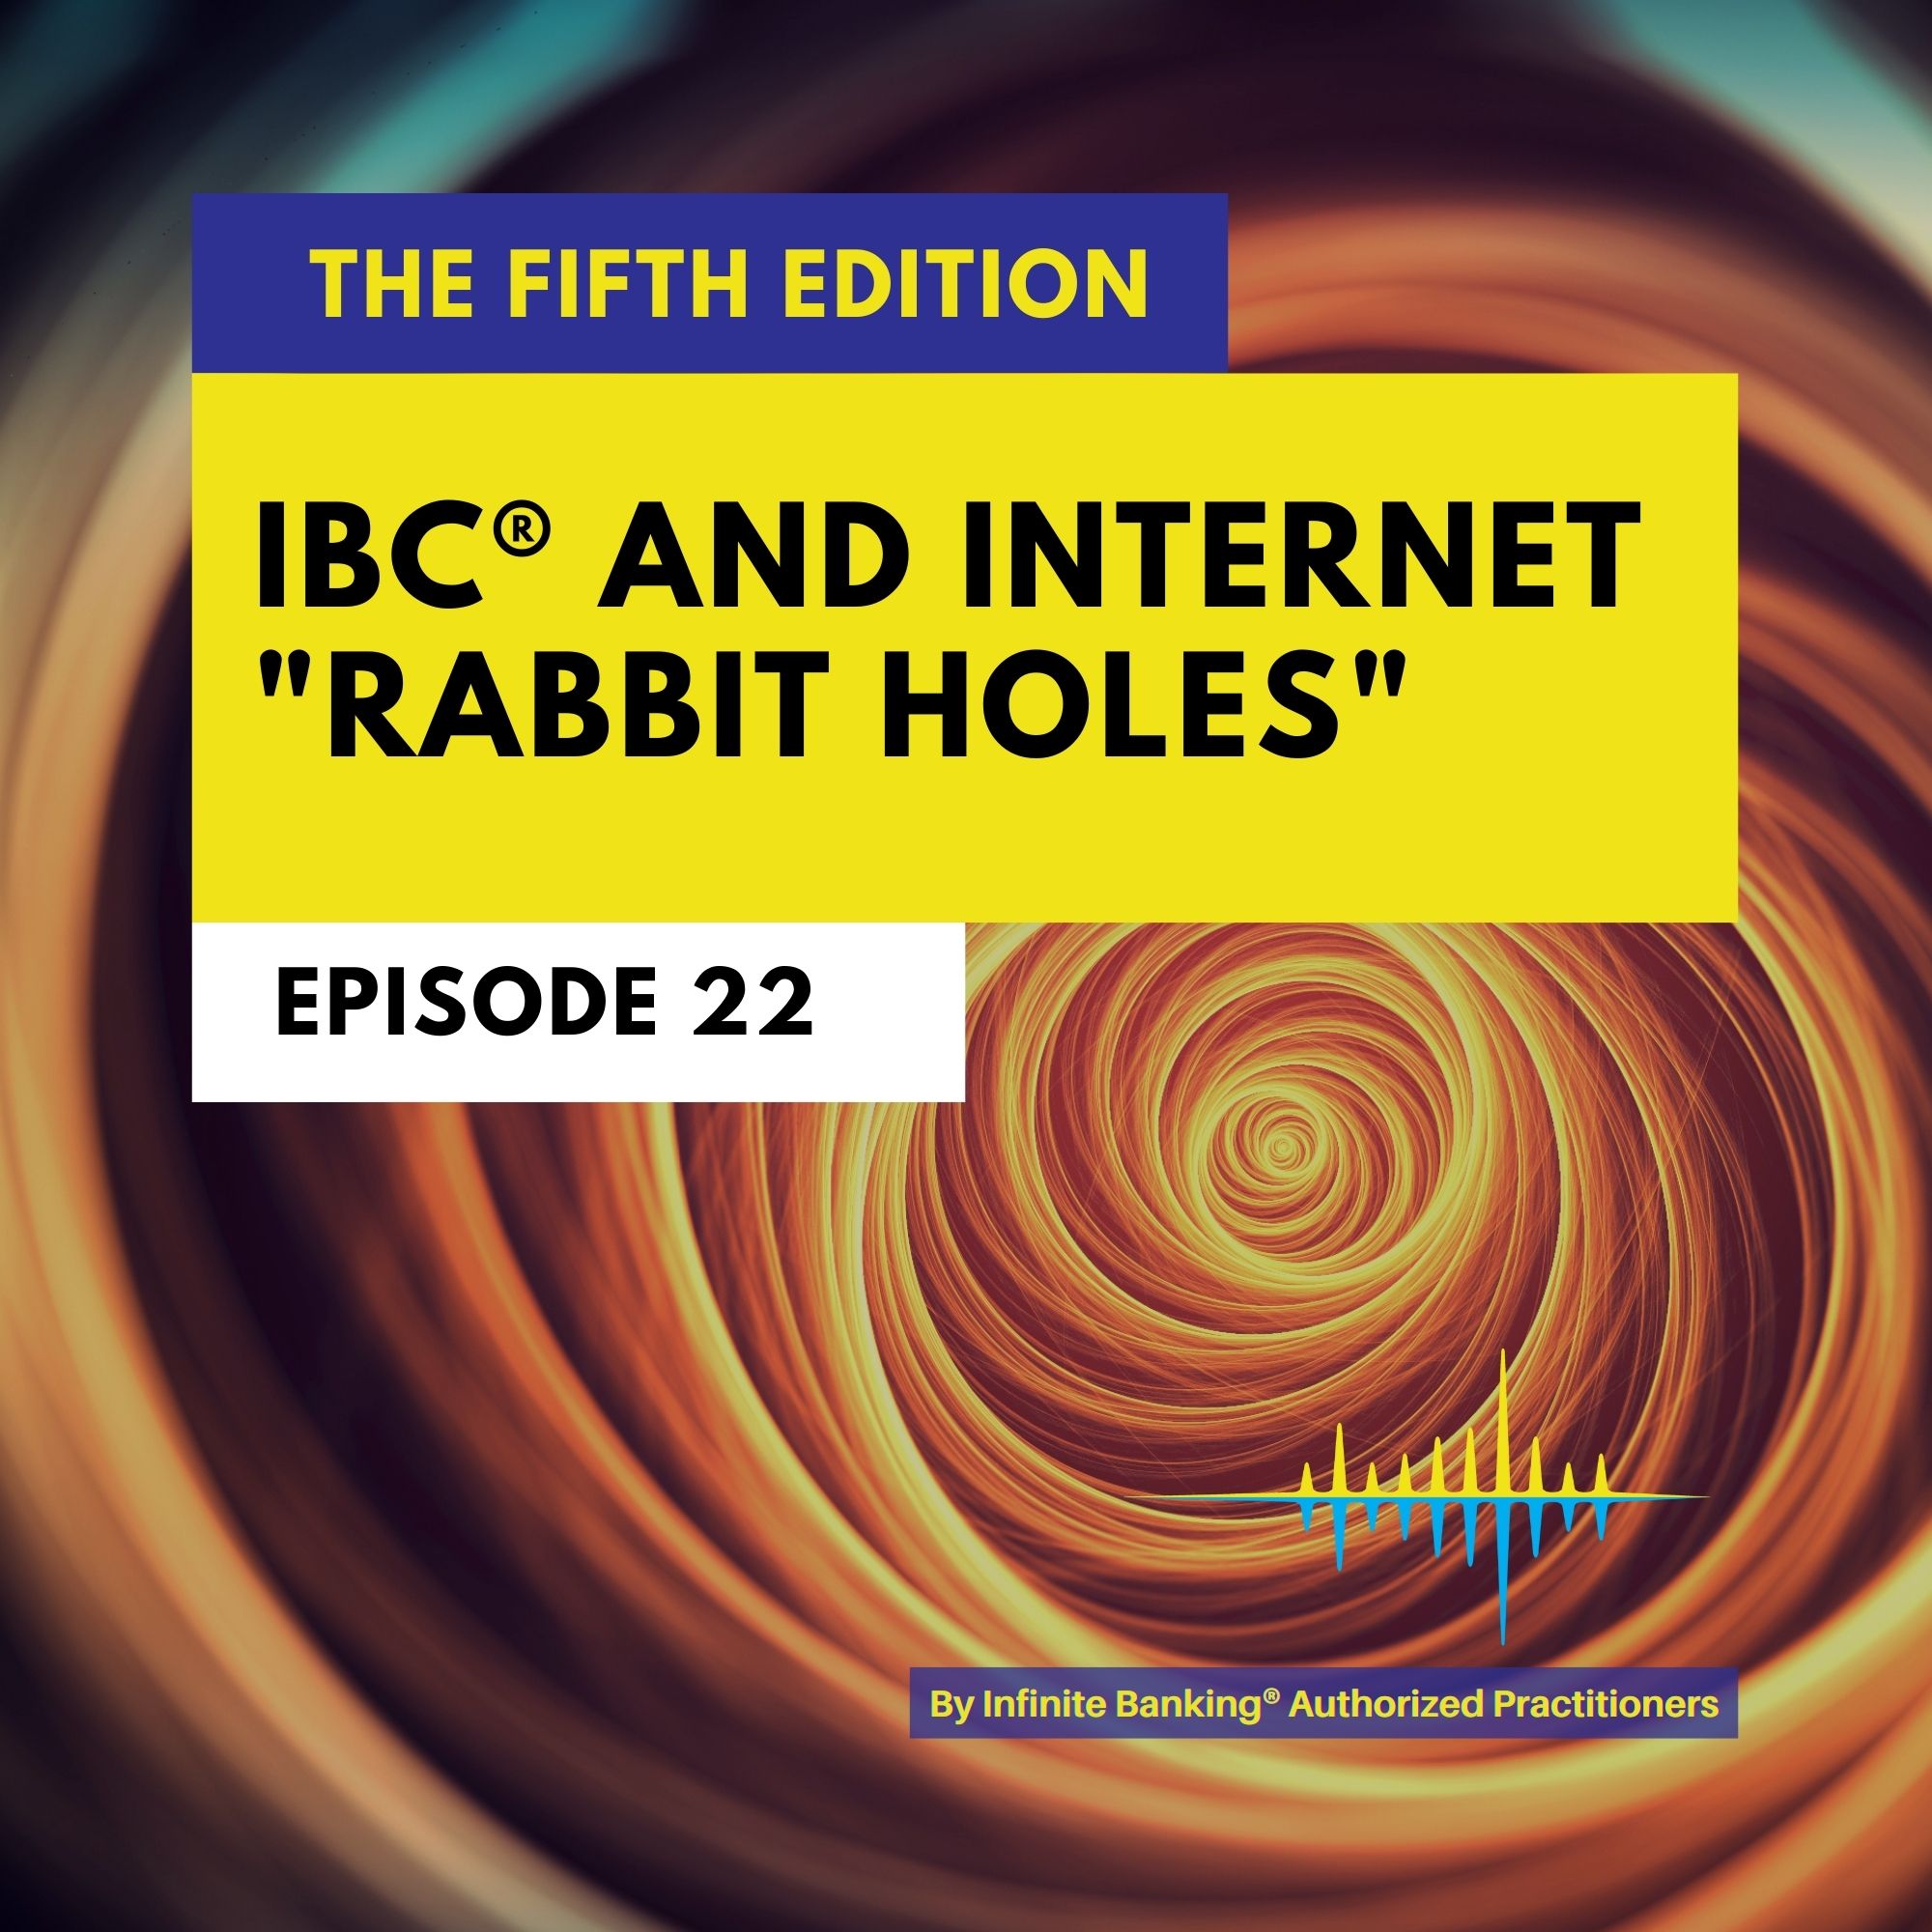 IBC and Internet "Rabbit Holes" Image